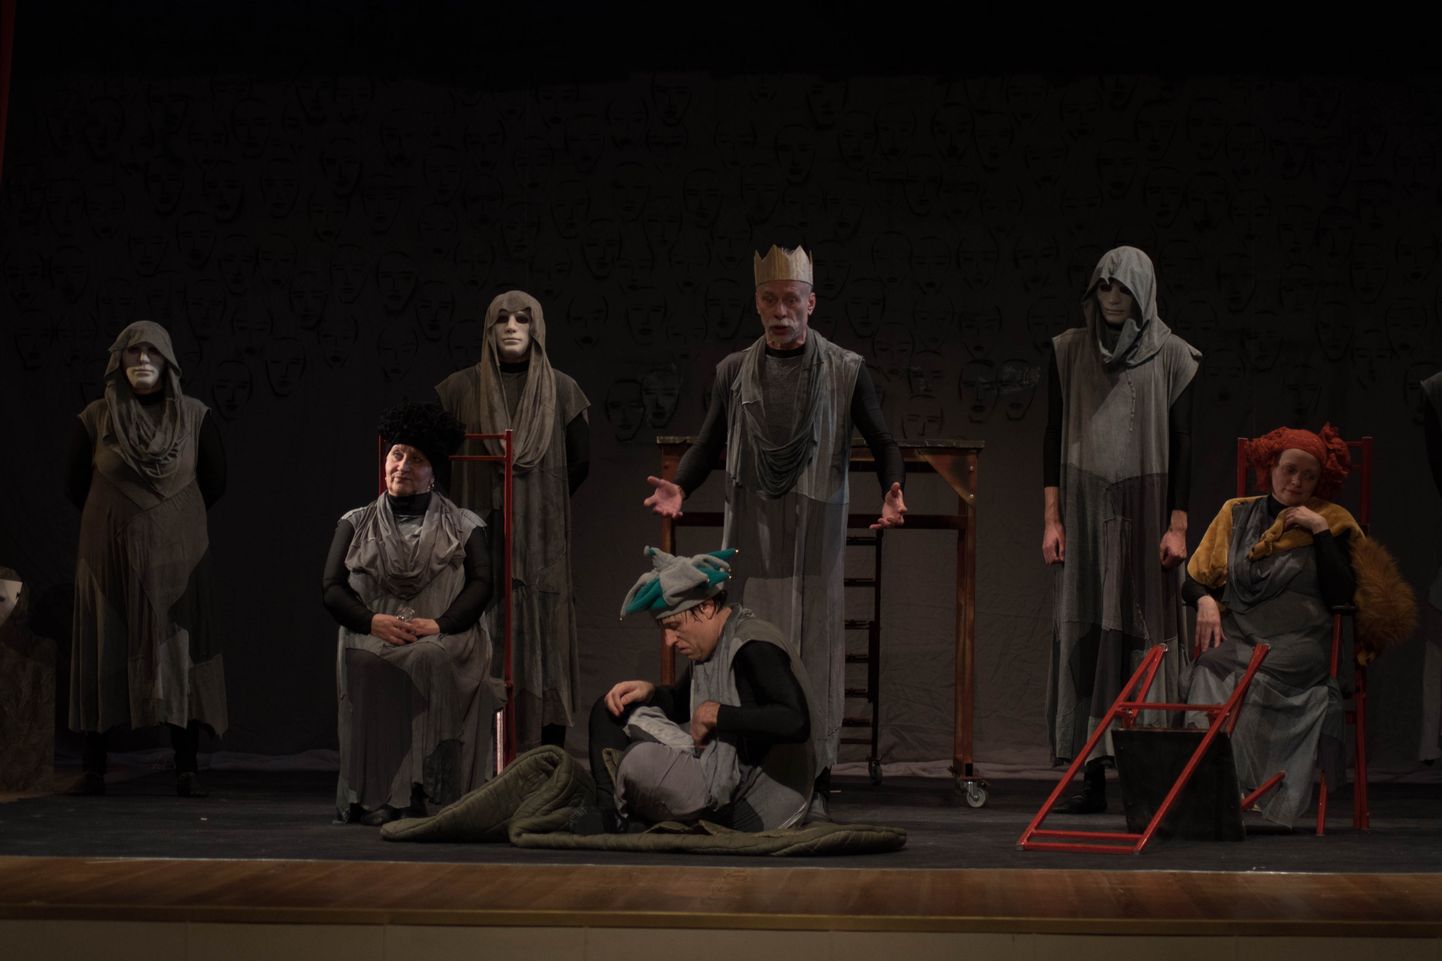 "Король Лир" в исполнении театра "Отпад" - трагифарс на грани абсурда.